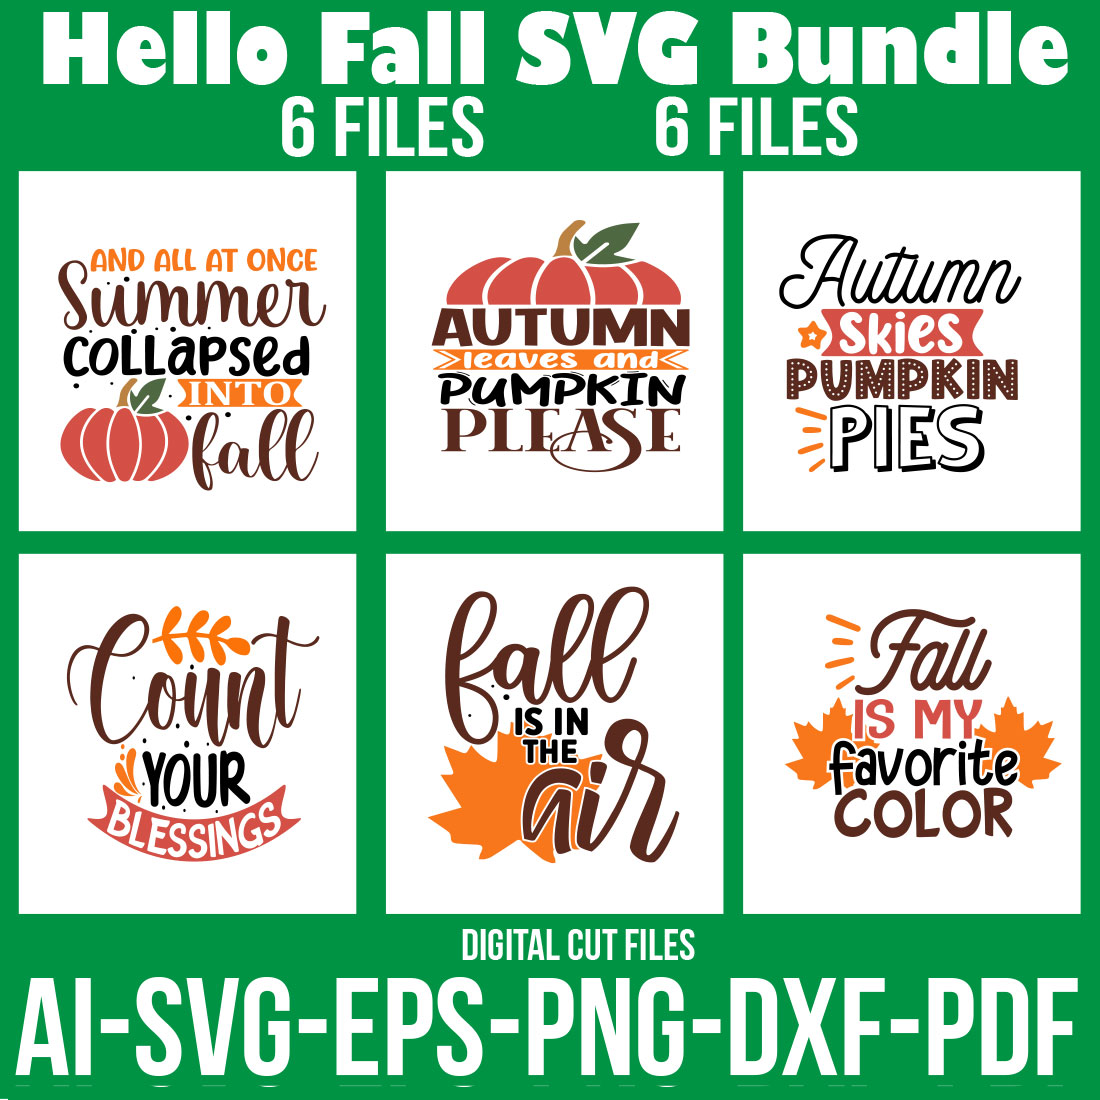 Hello Fall SVG Bundle cover image.